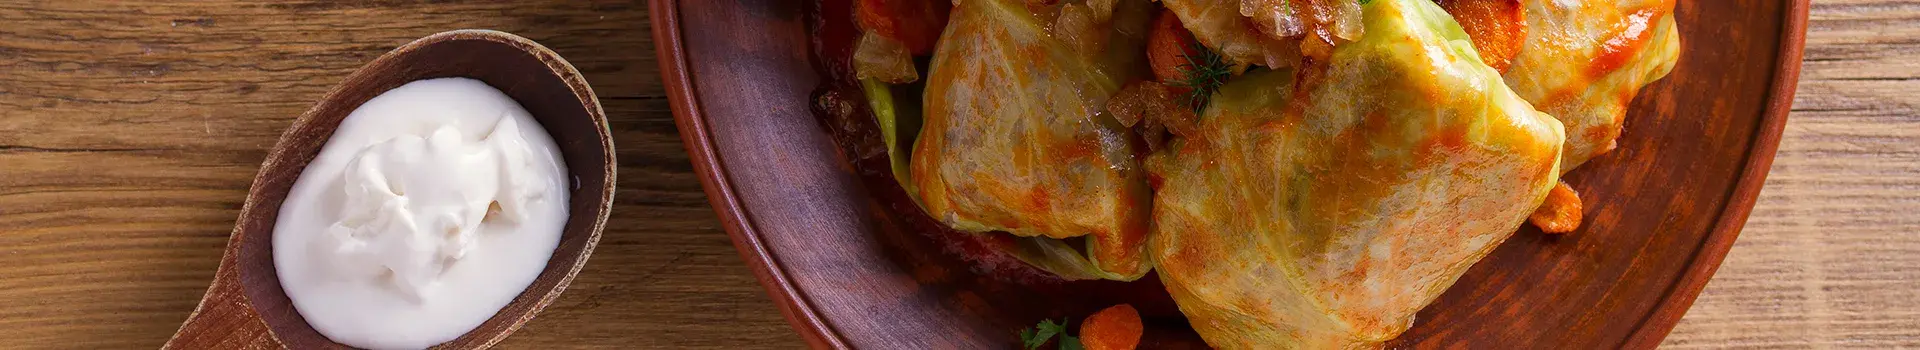 Gołąbki - Stuffed cabbage rolls in tomato sauce